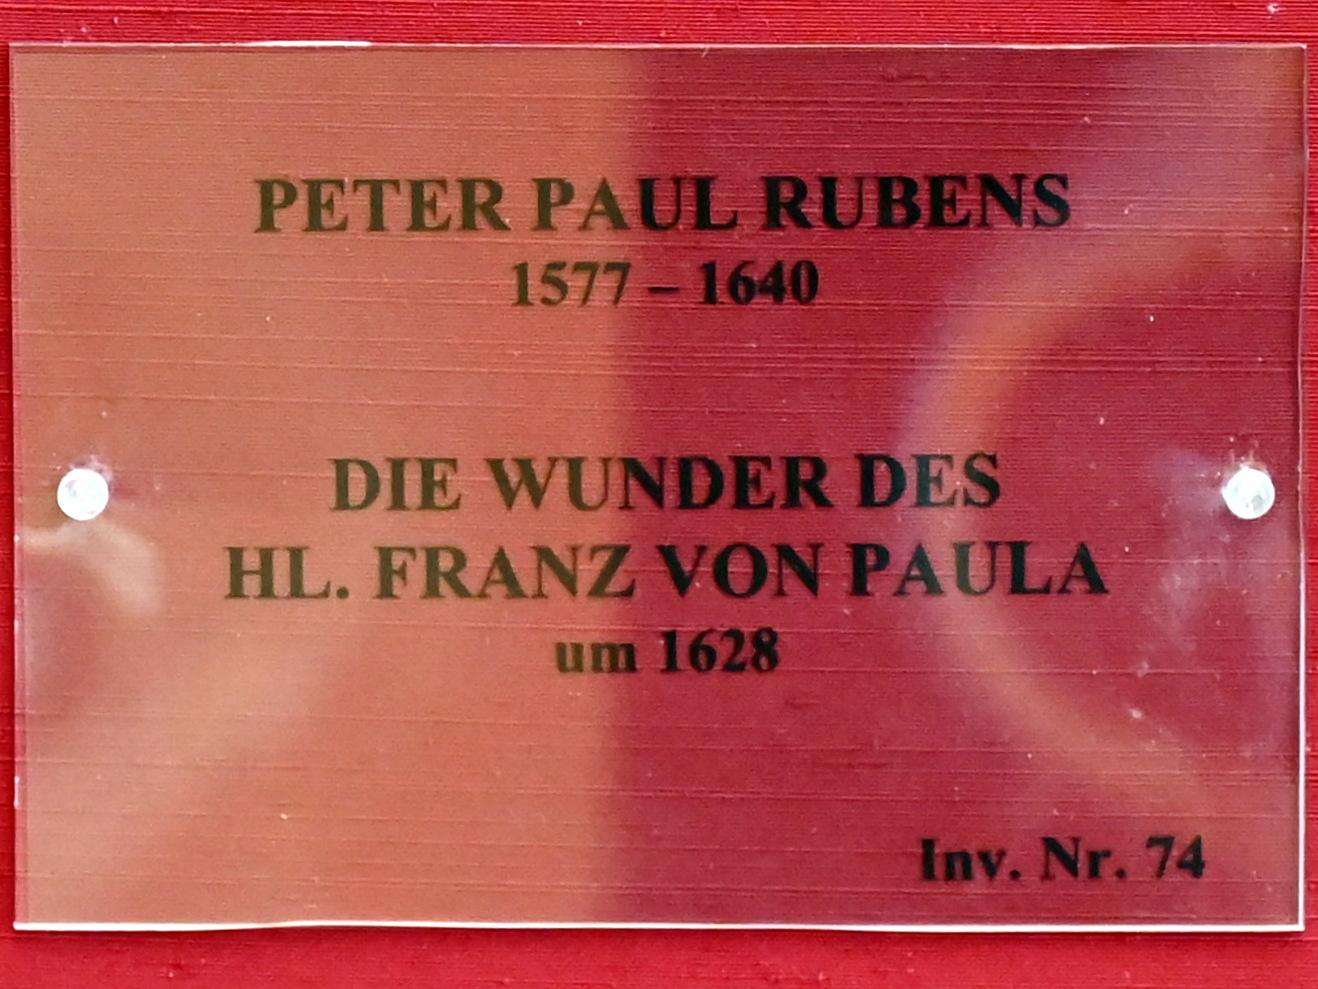 Peter Paul Rubens (1598–1640), Das Wunder des hl. Franz von Paula, München, Alte Pinakothek, Obergeschoss Kabinett 12, um 1628, Bild 2/2